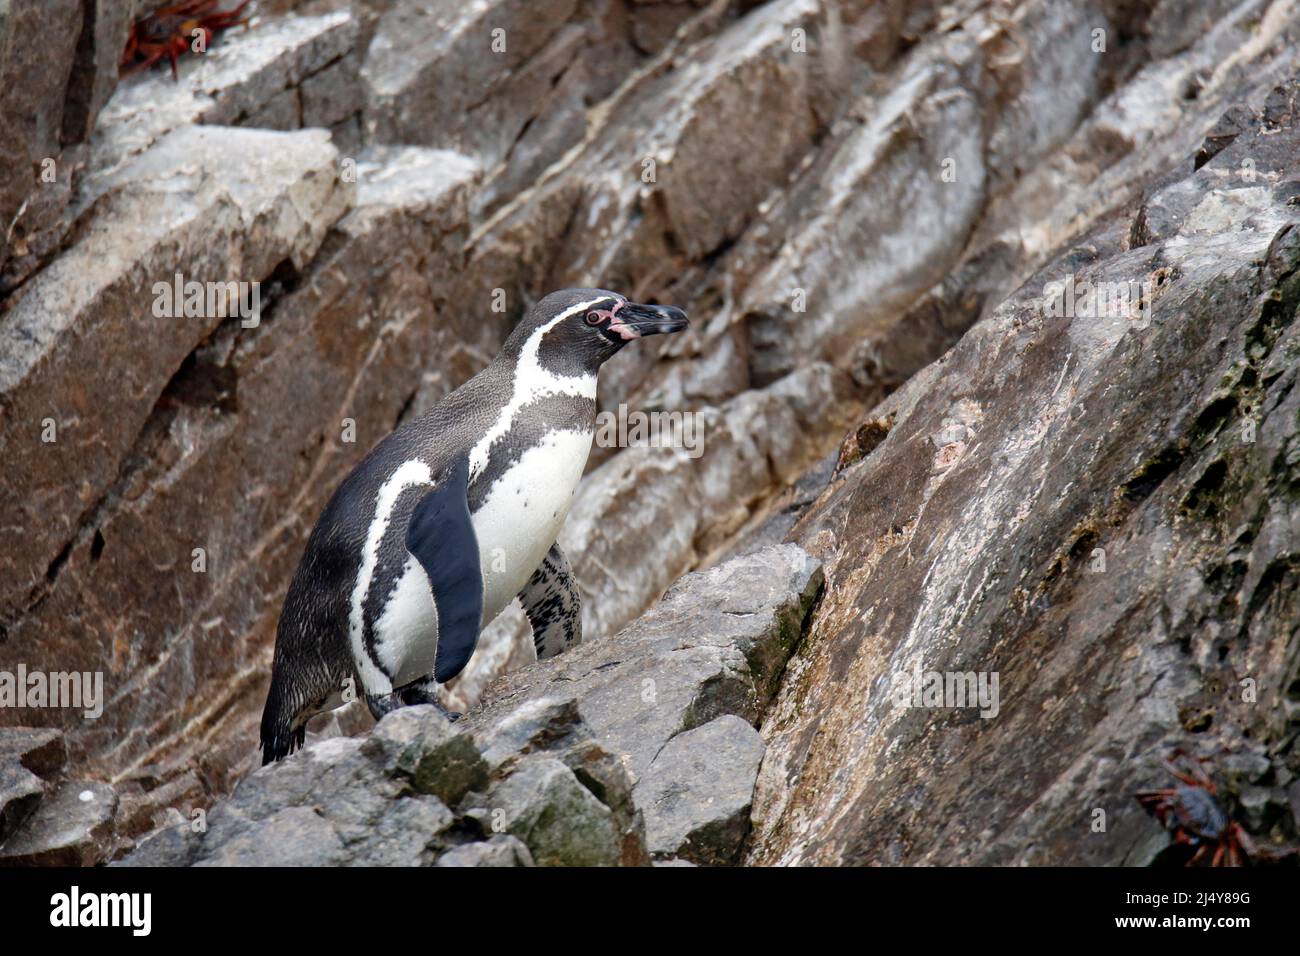 Humboldt penguin, penguin, rock, climbing, Spheniscus humboldti, penguin Ballestas Islands, penguin Pisco, penguin Paracas, penguin Peru, birds Peru, Stock Photo